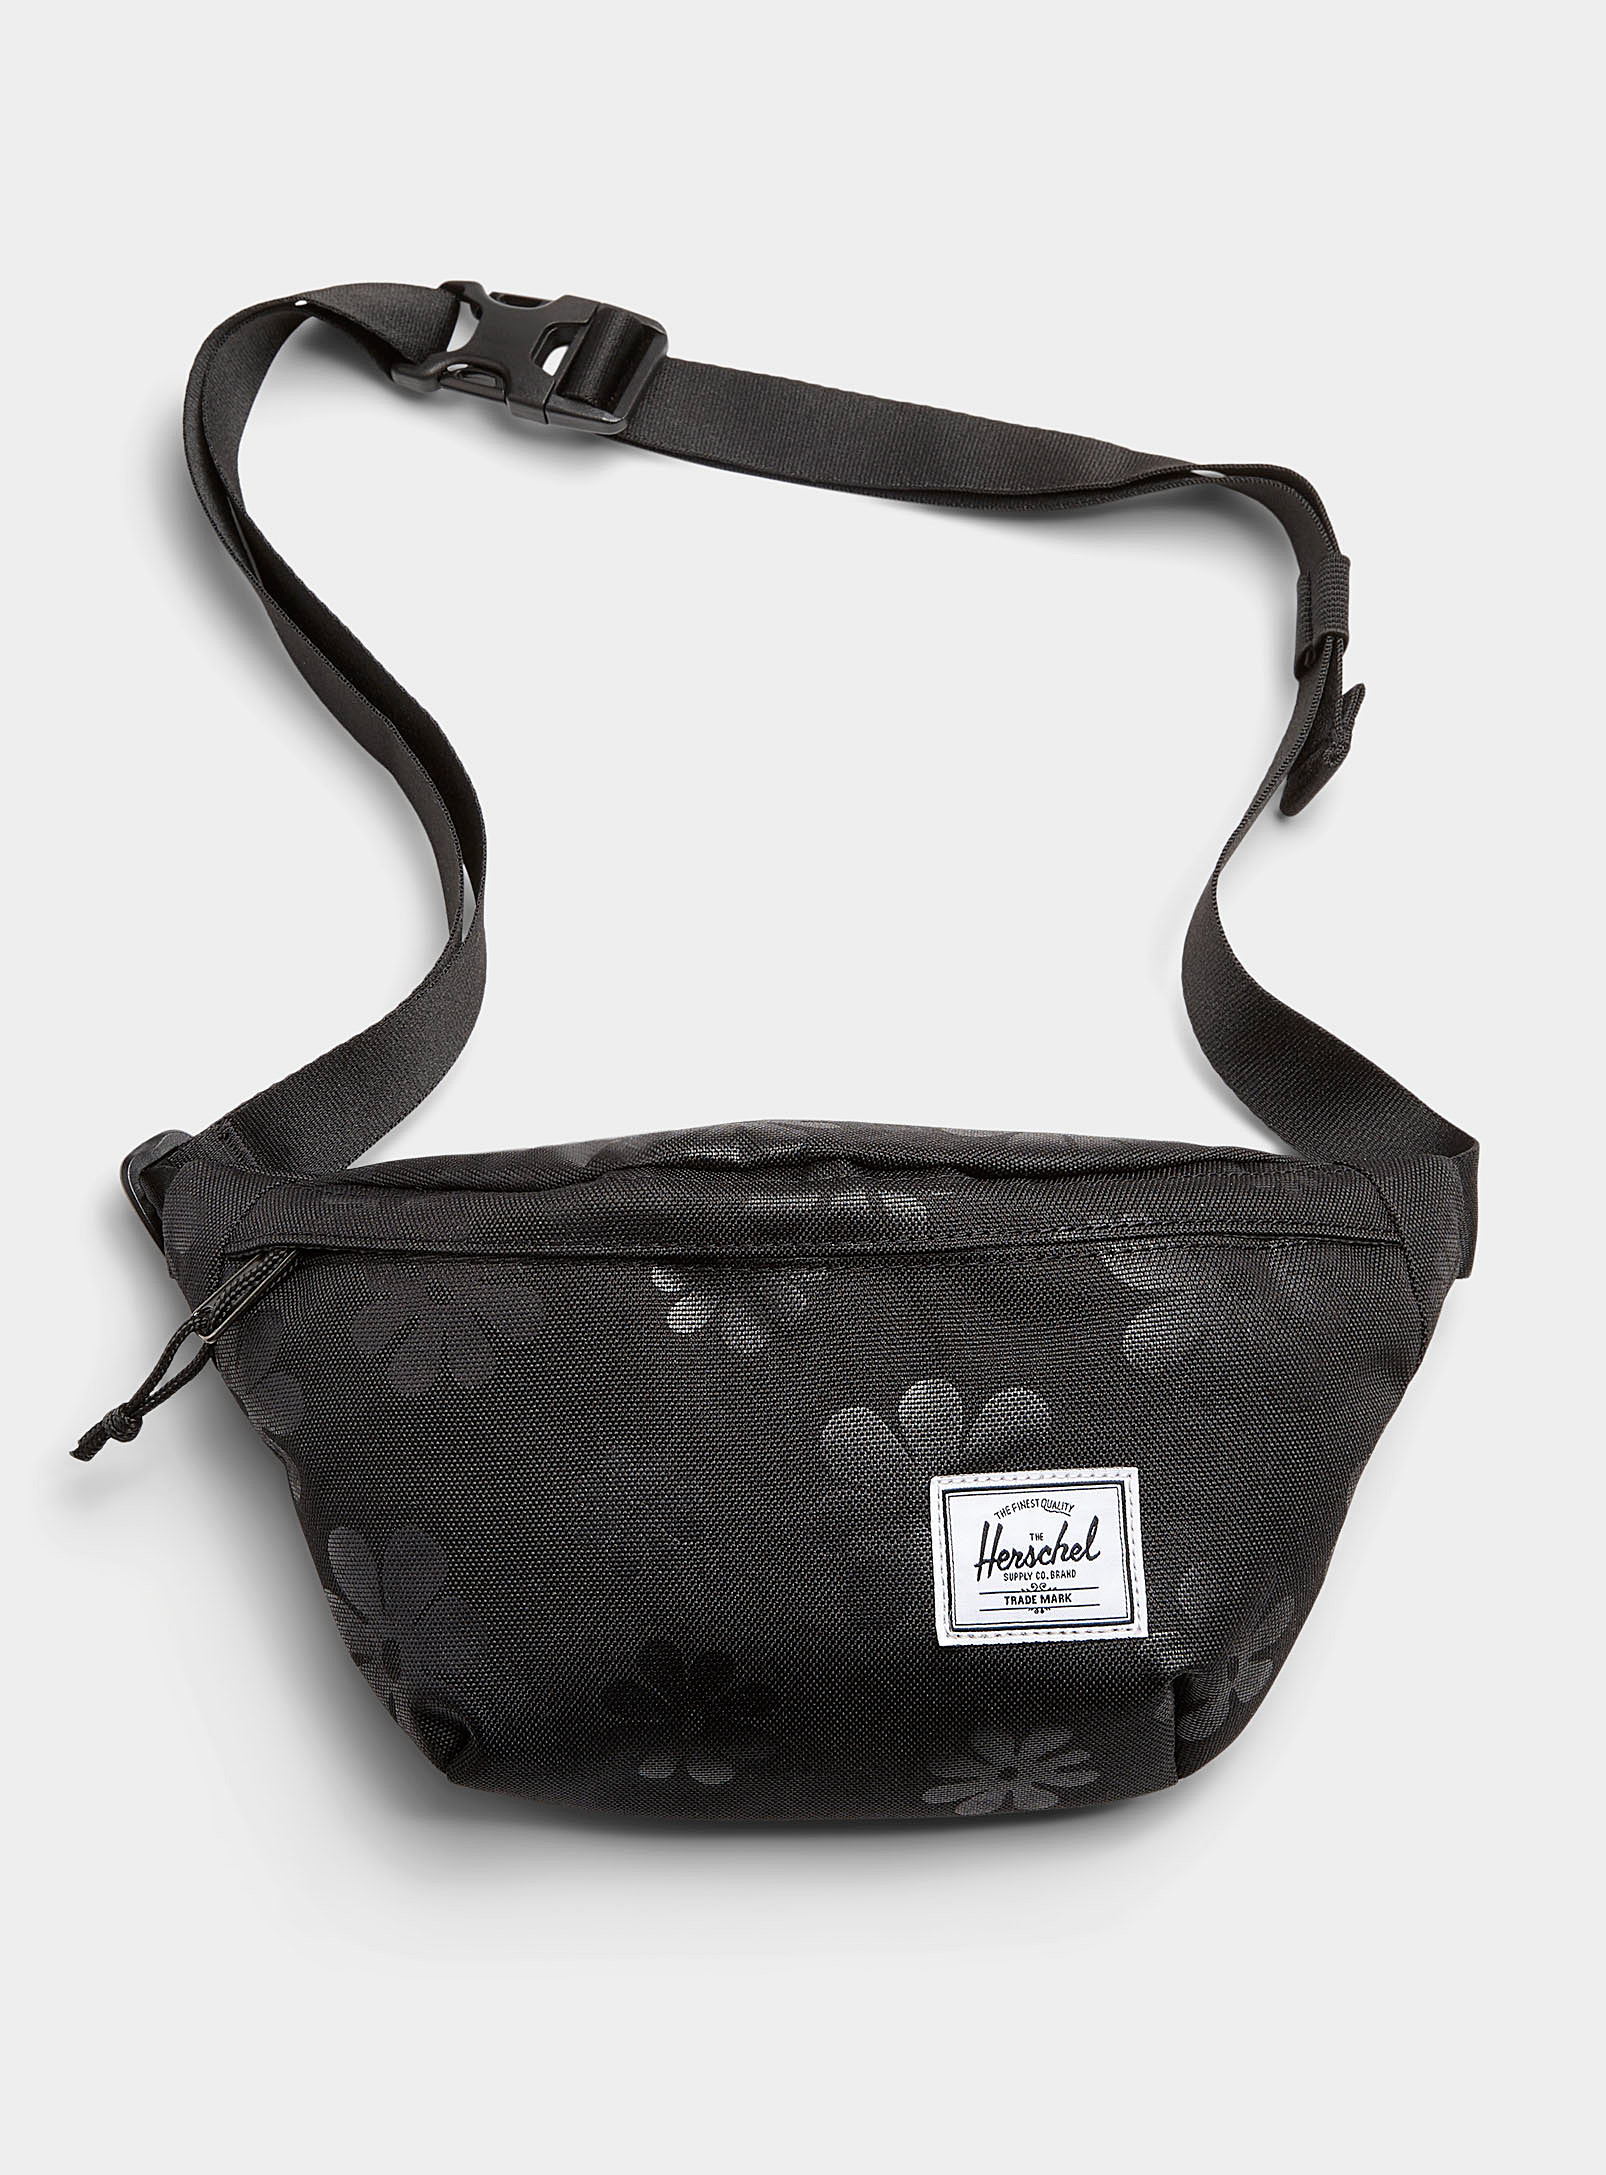 Herschel Classic Ecosystem Tm Belt Bag In Patterned Black